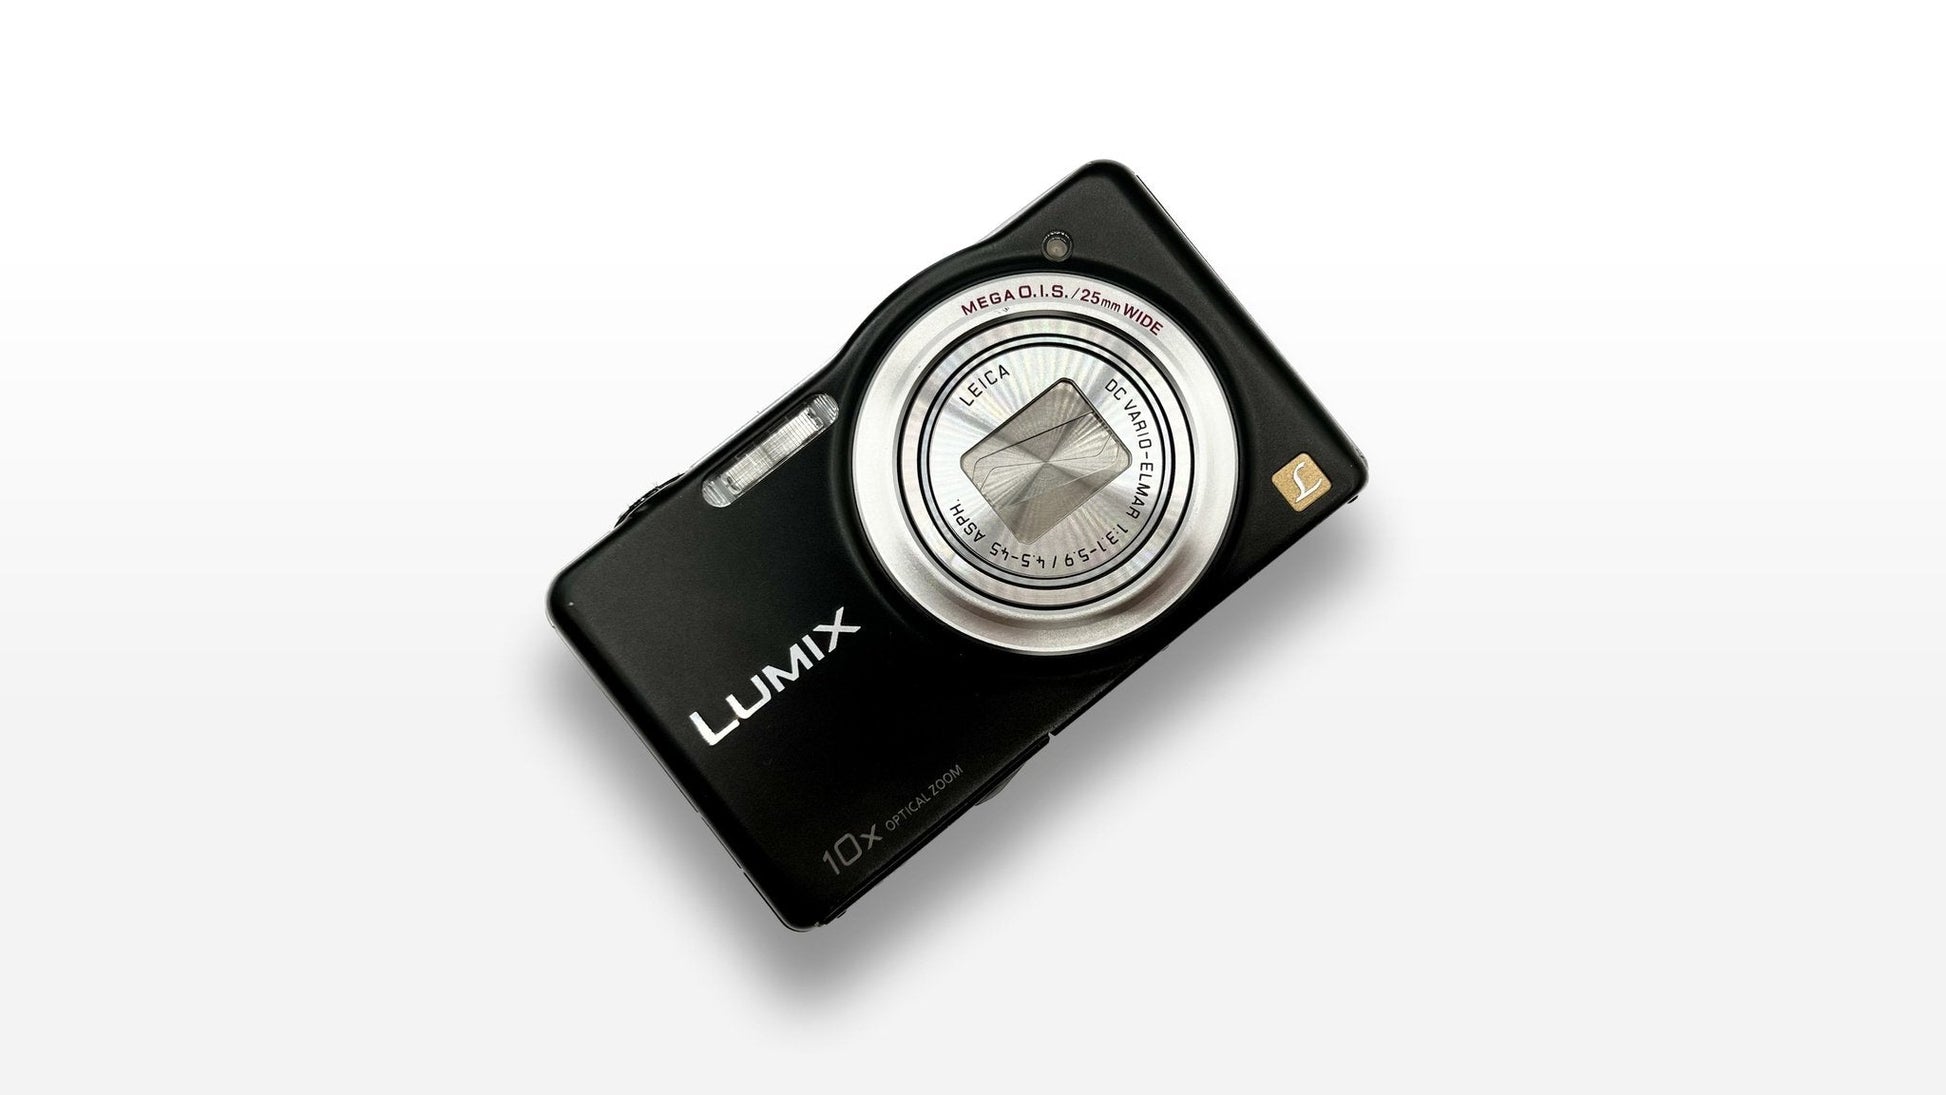 Panasonic Lumix